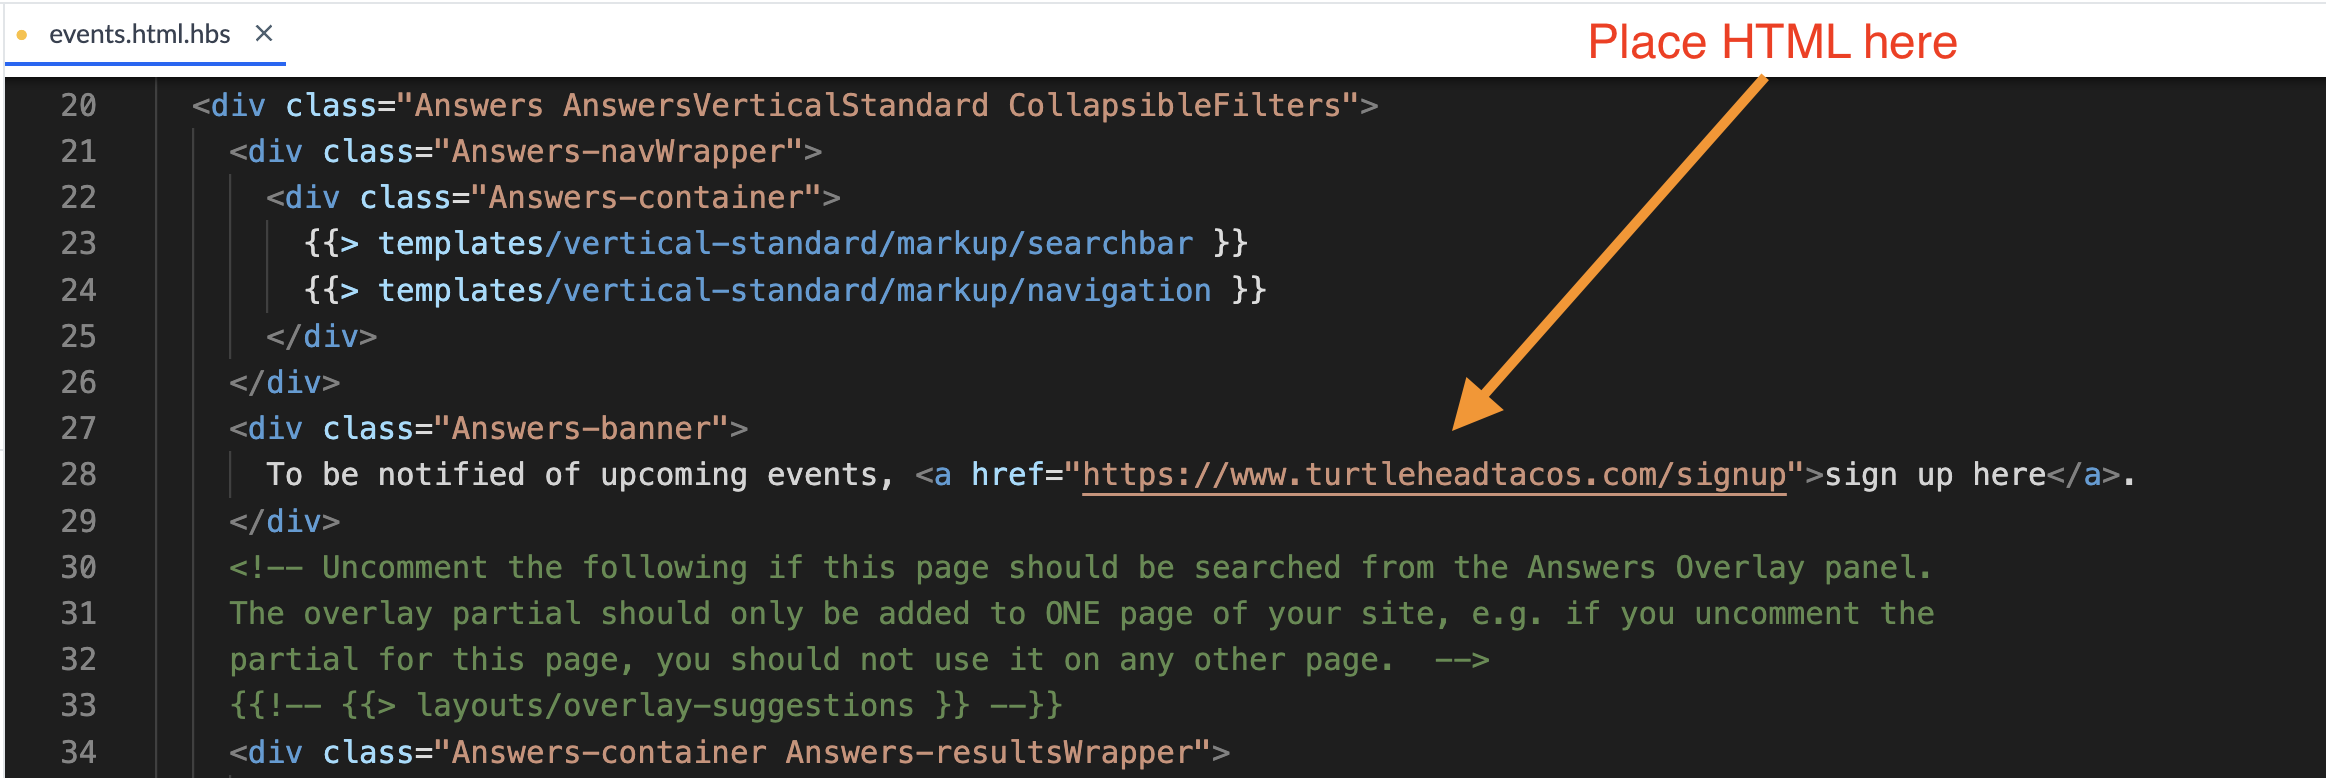 Alert banner html added to events Handlebars file